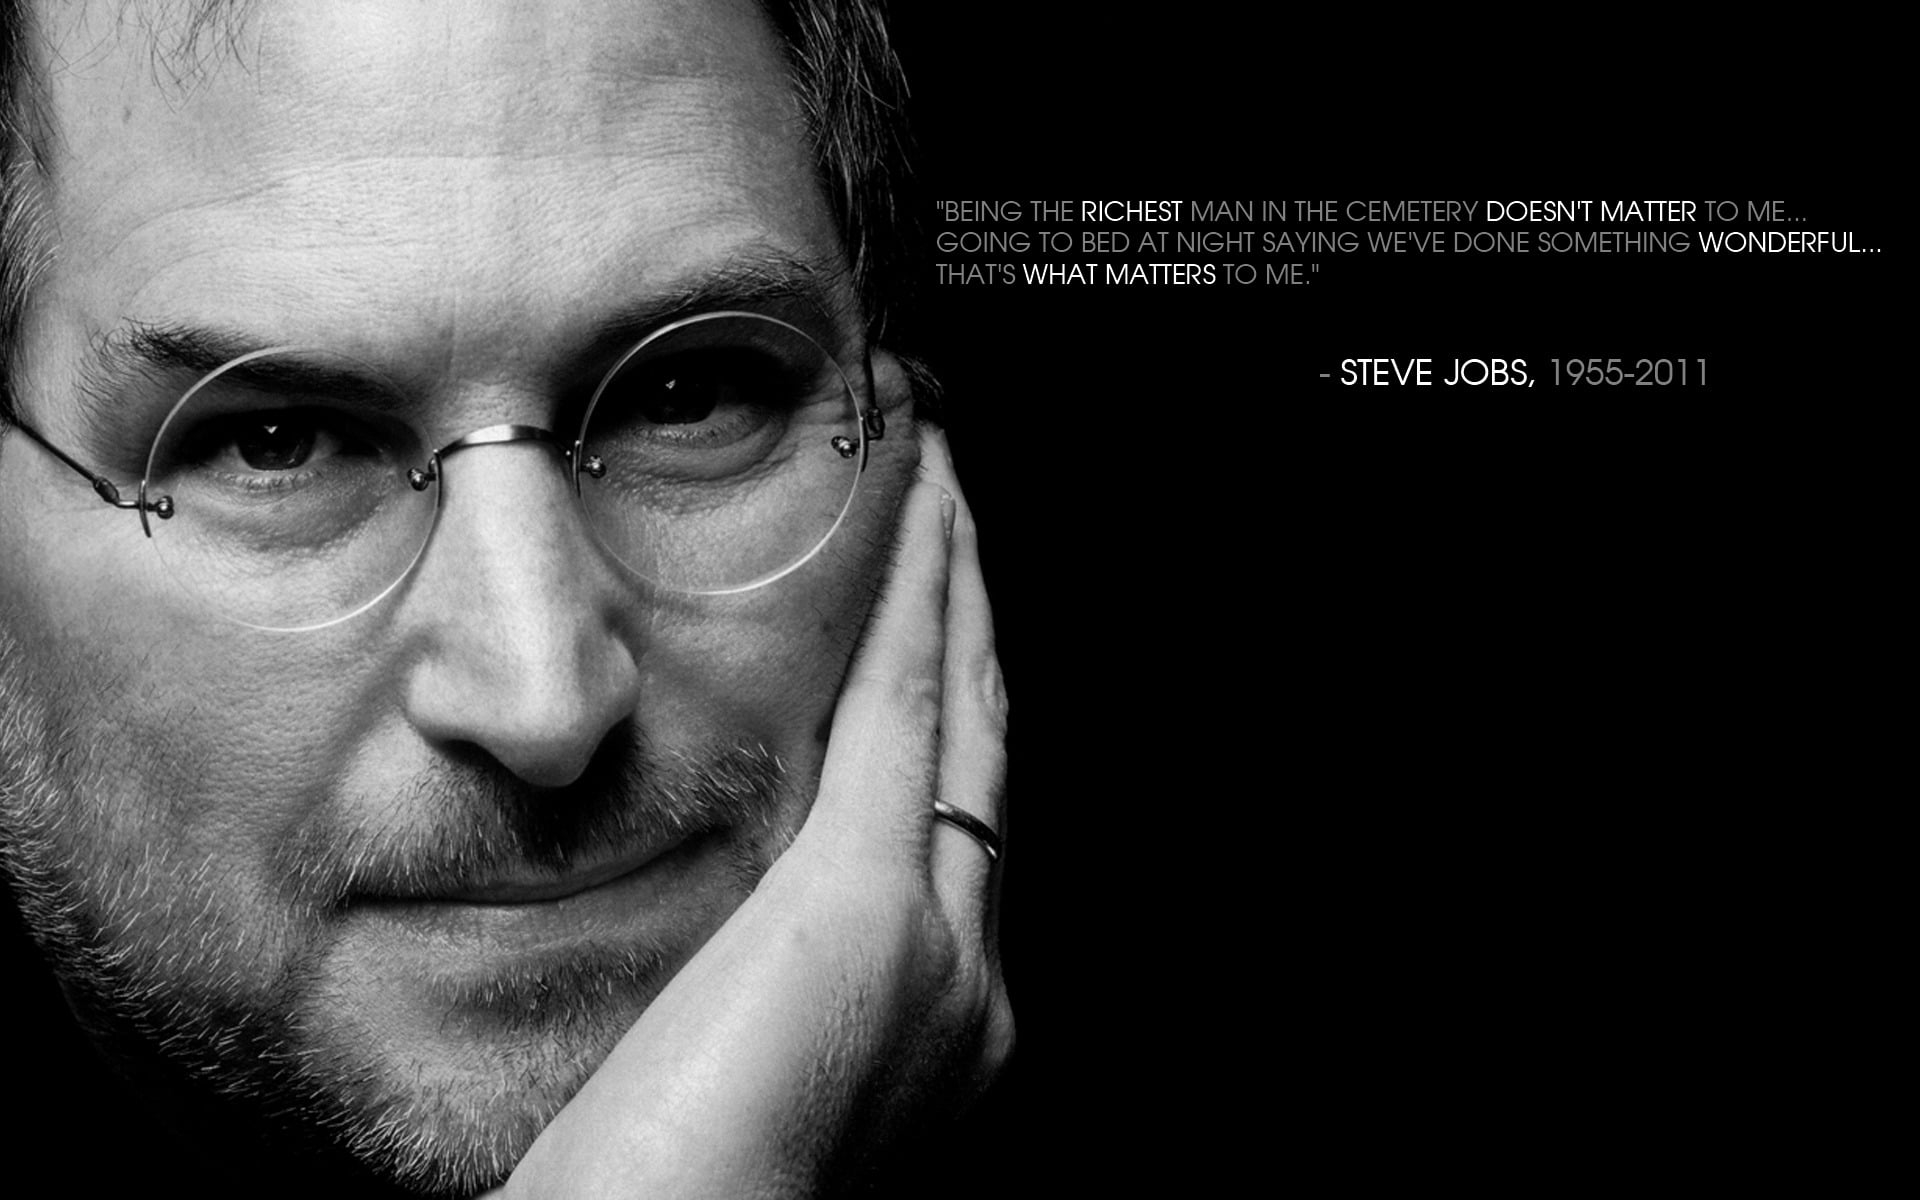 Steve Jobs quote wallpaper, inspirational, motivational, monochrome, portrait